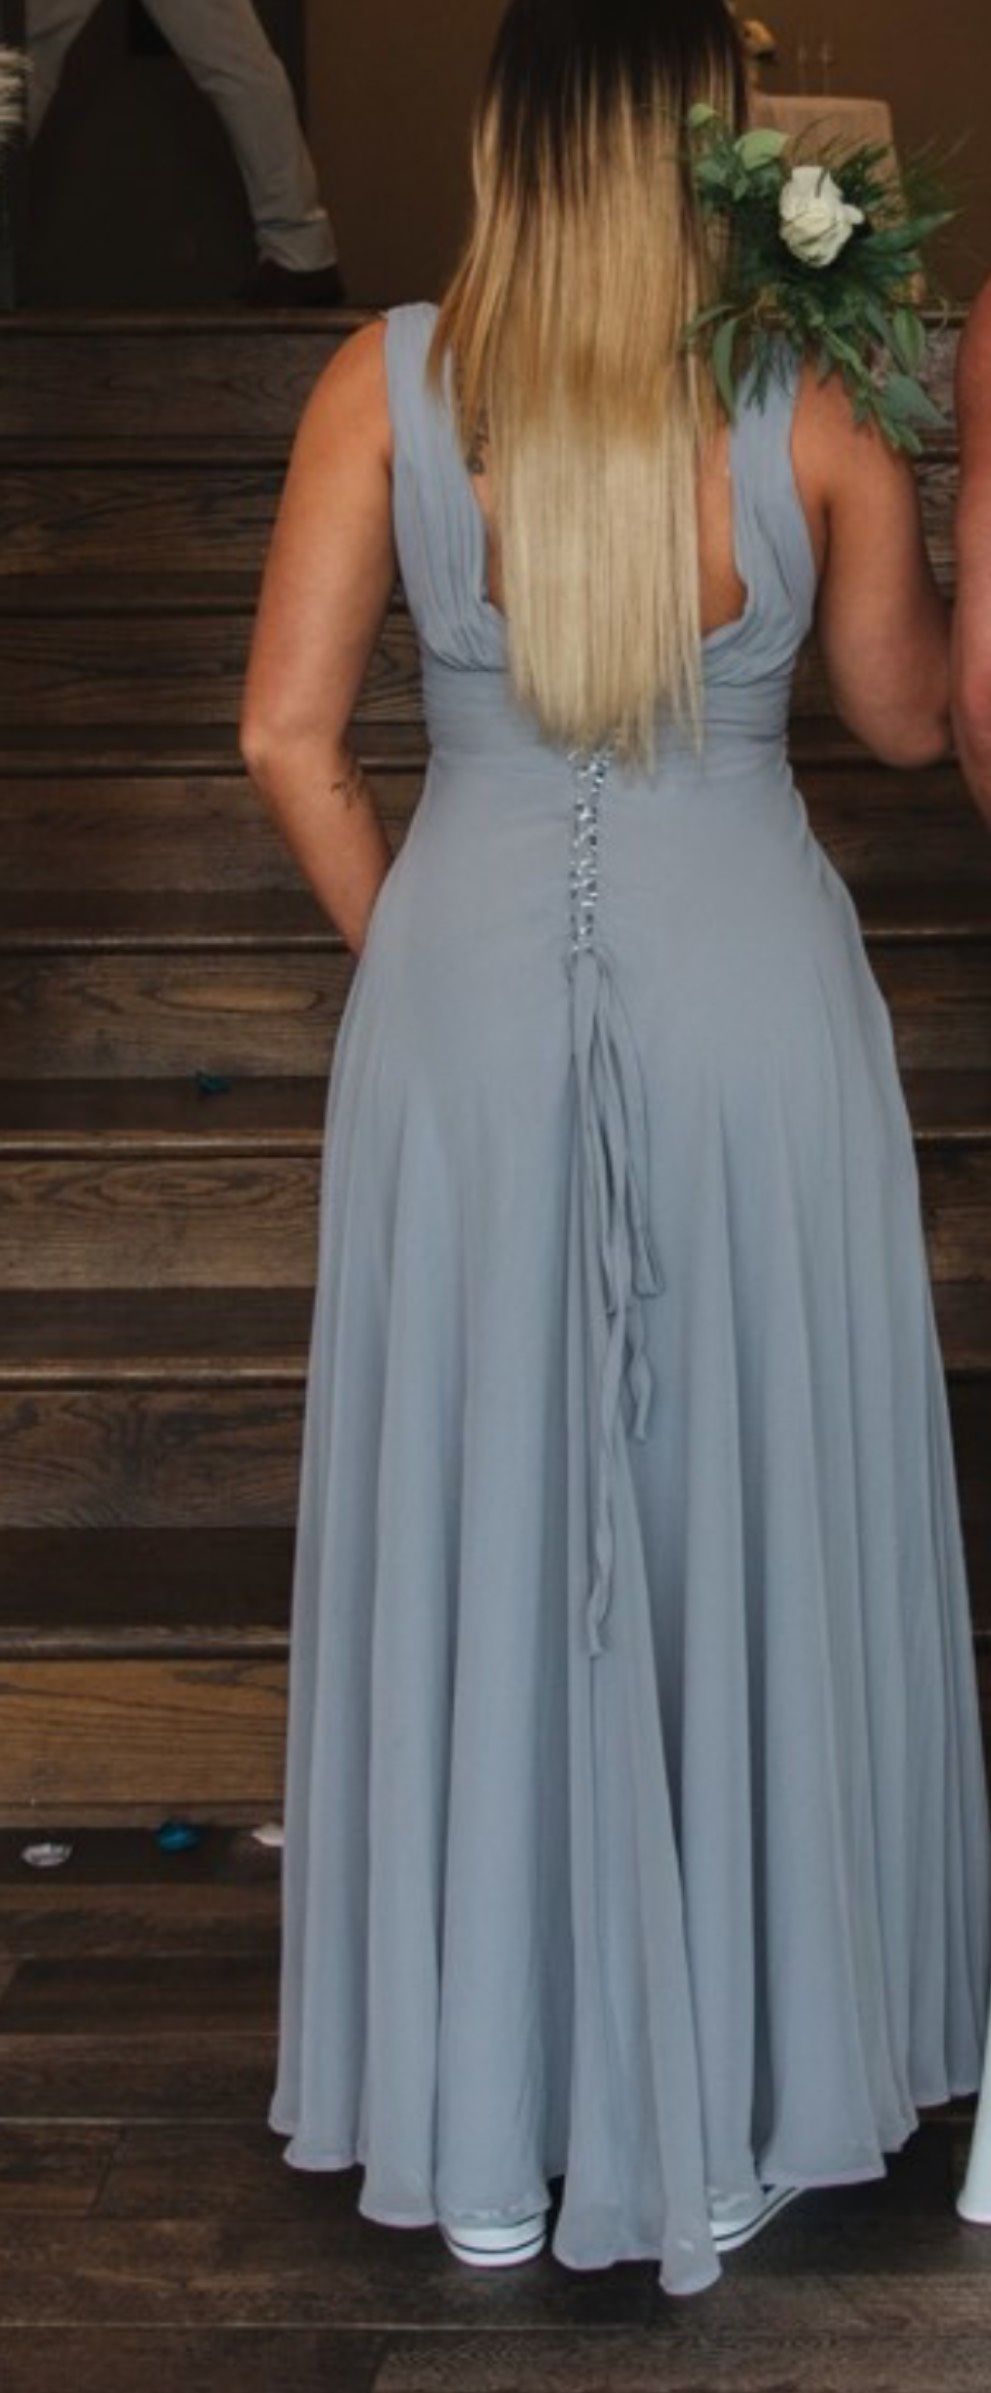 Size 0 Prom Plunge Blue Side Slit Dress on Queenly